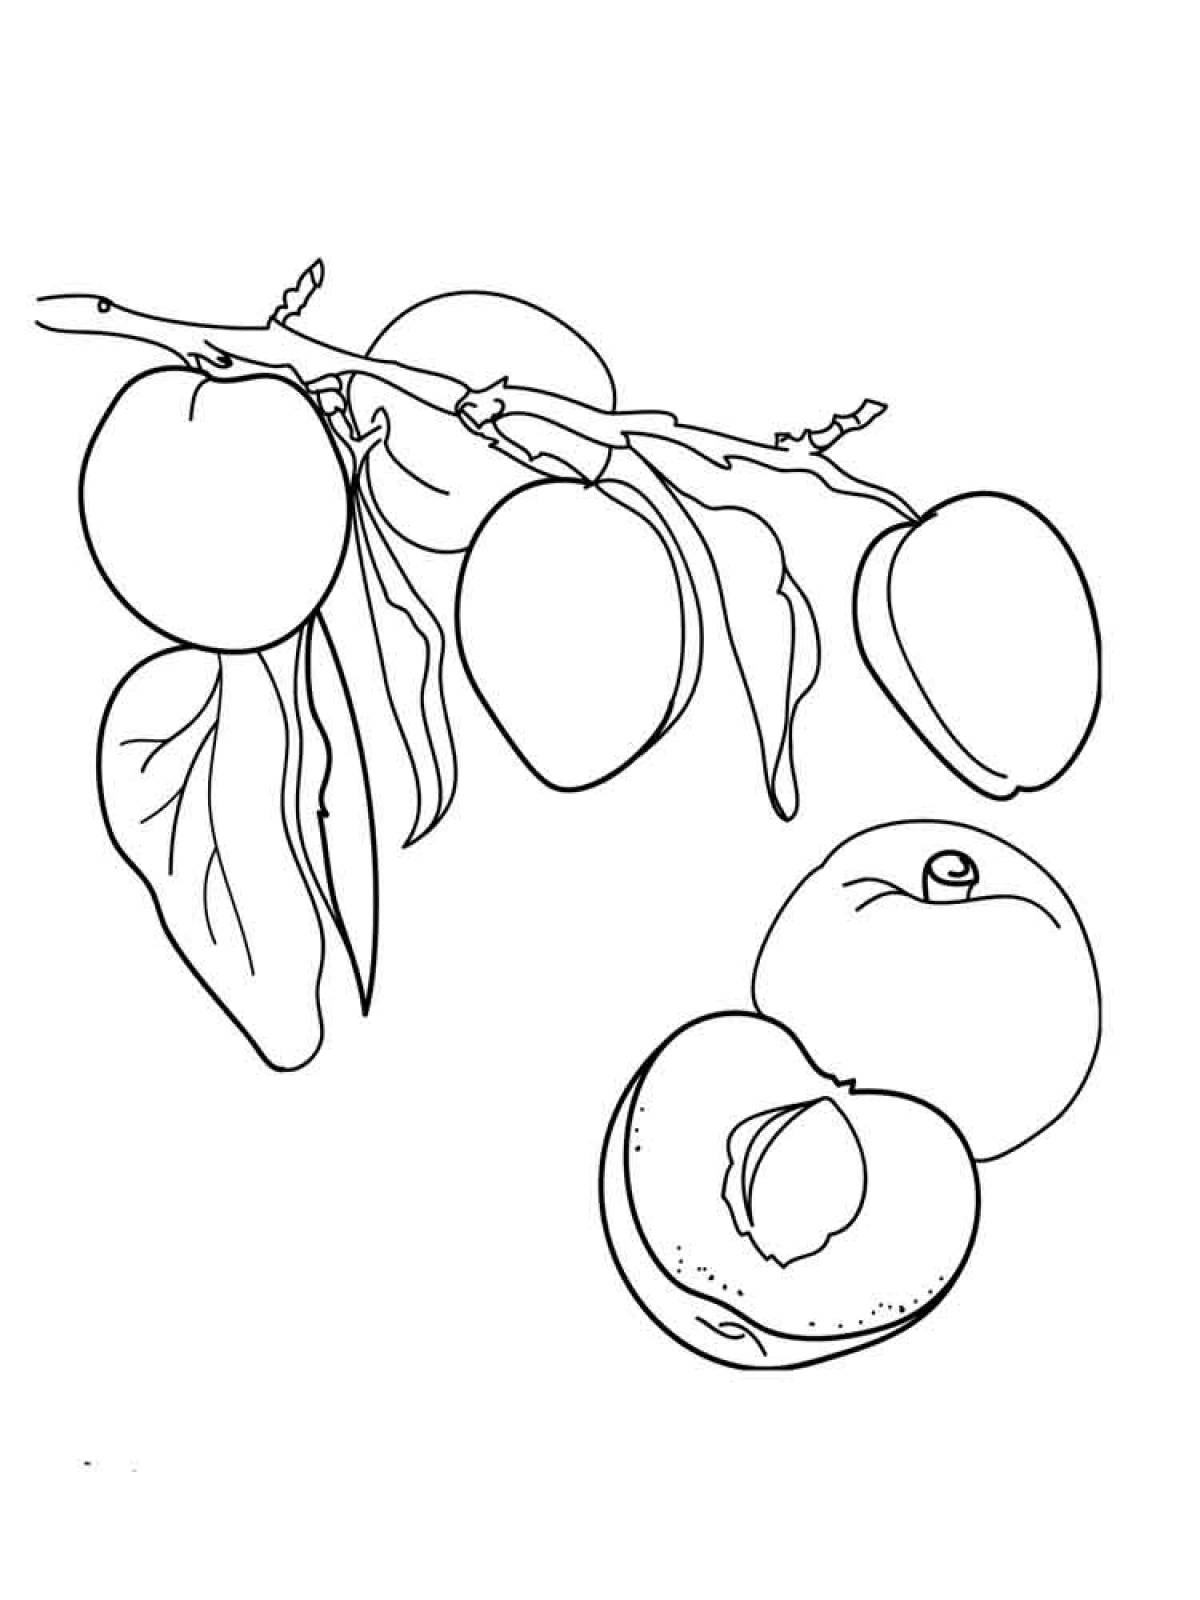 Apricot drawing